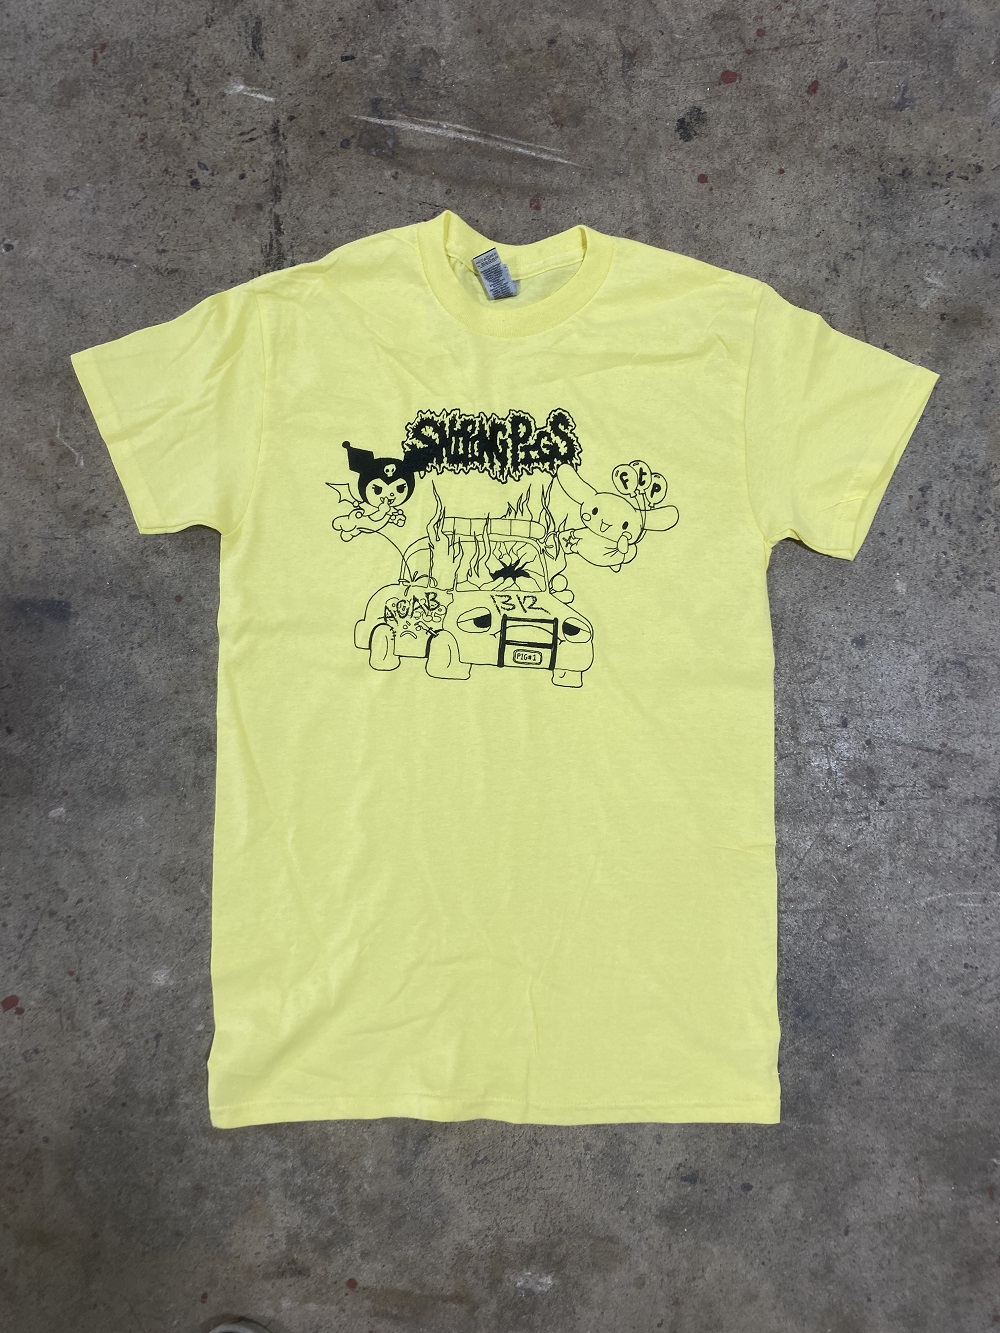 Sniping Pigs - Sanrio Car Bomb Shirt (SMALL)